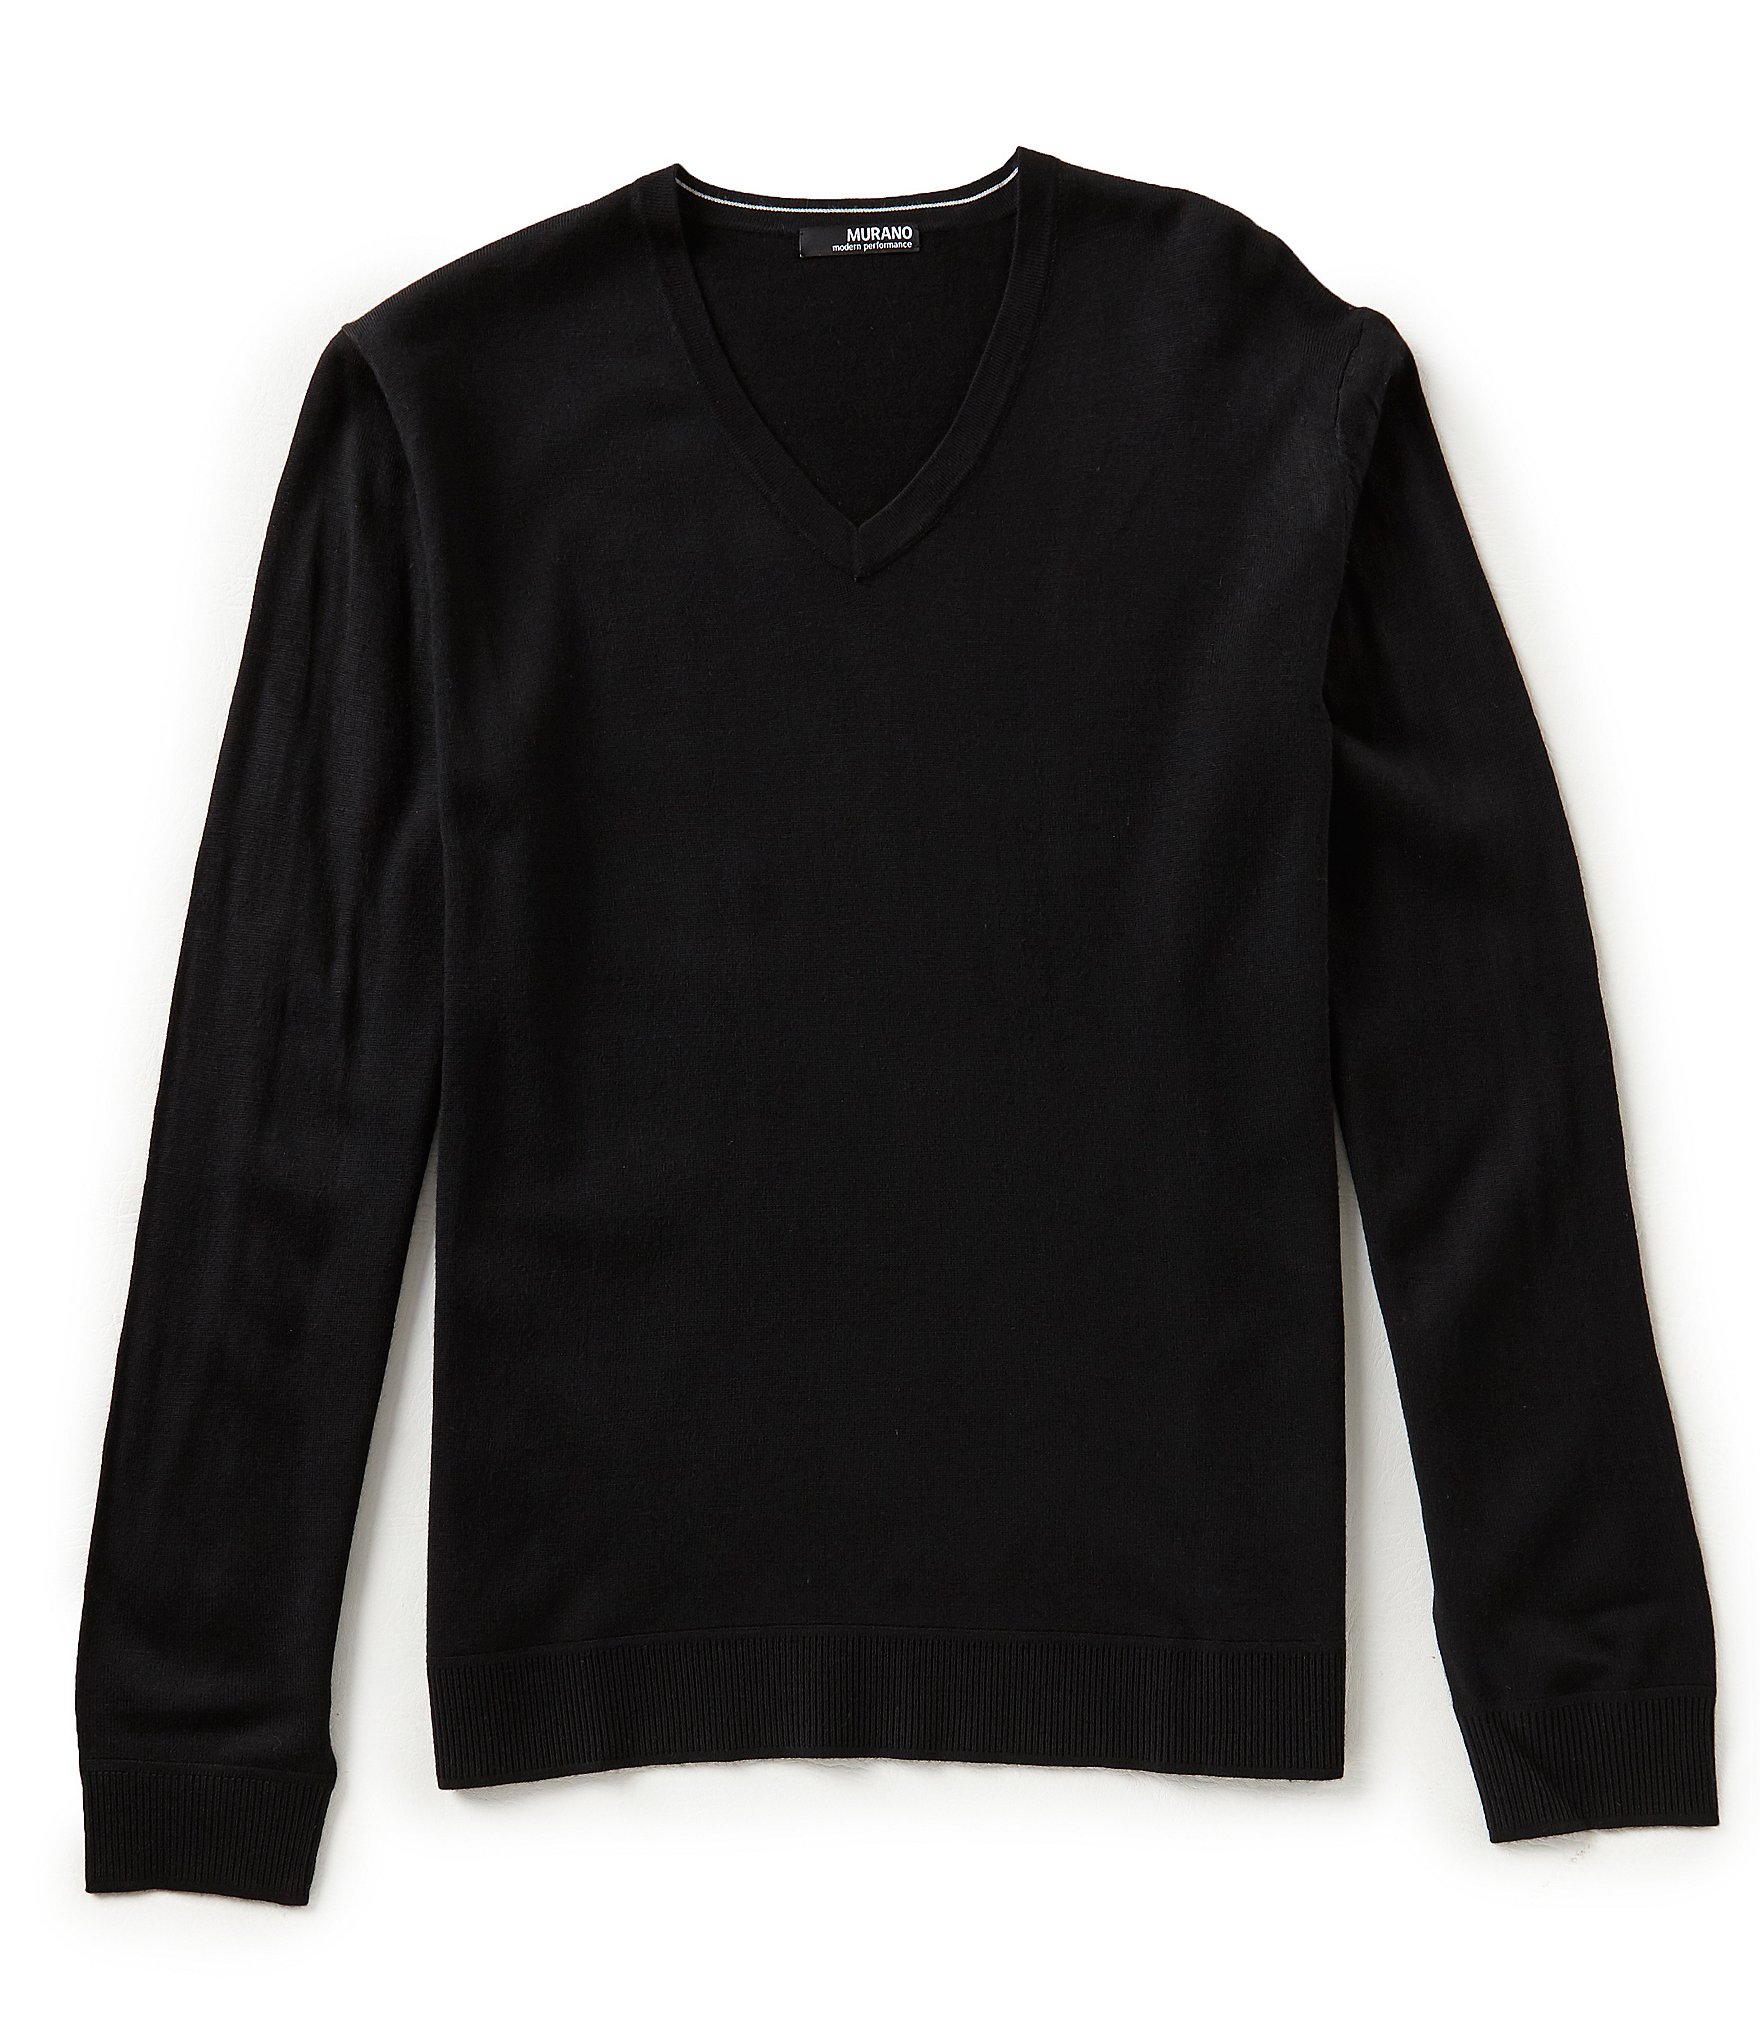 Men's Clothing & Accessories: Men's Murano Sweaters